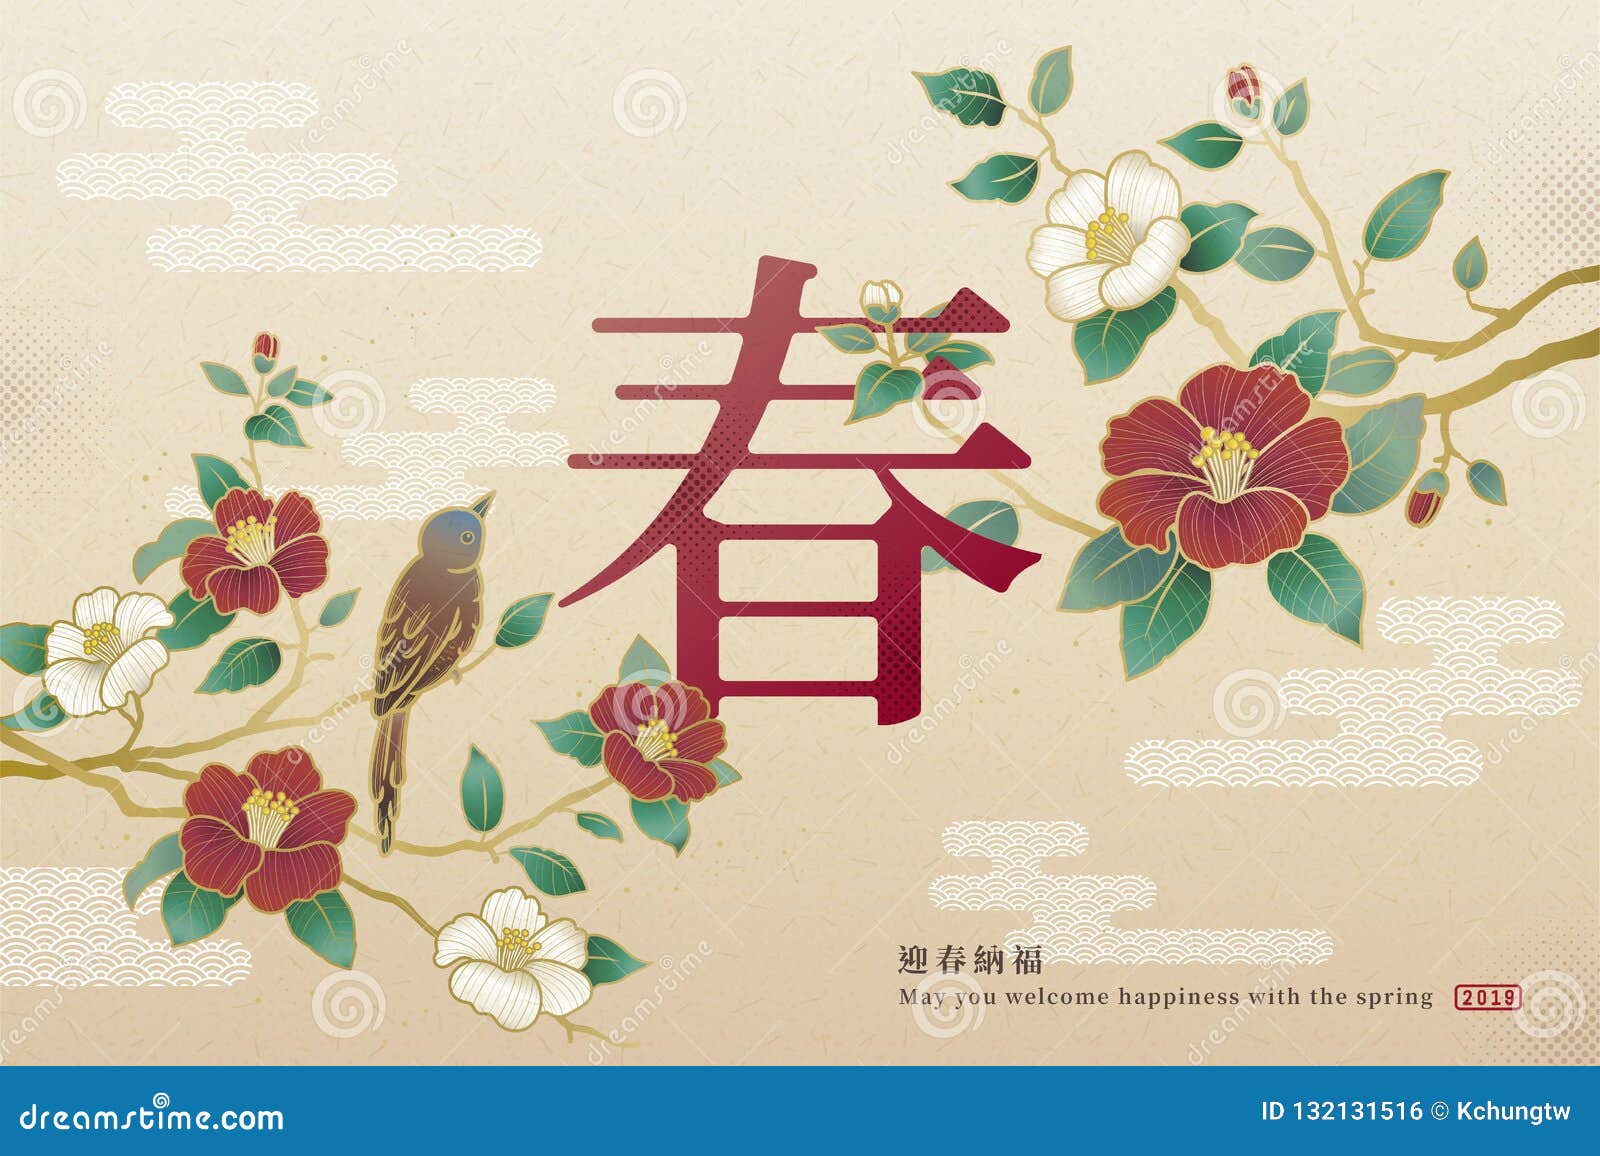 elegant lunar new year poster